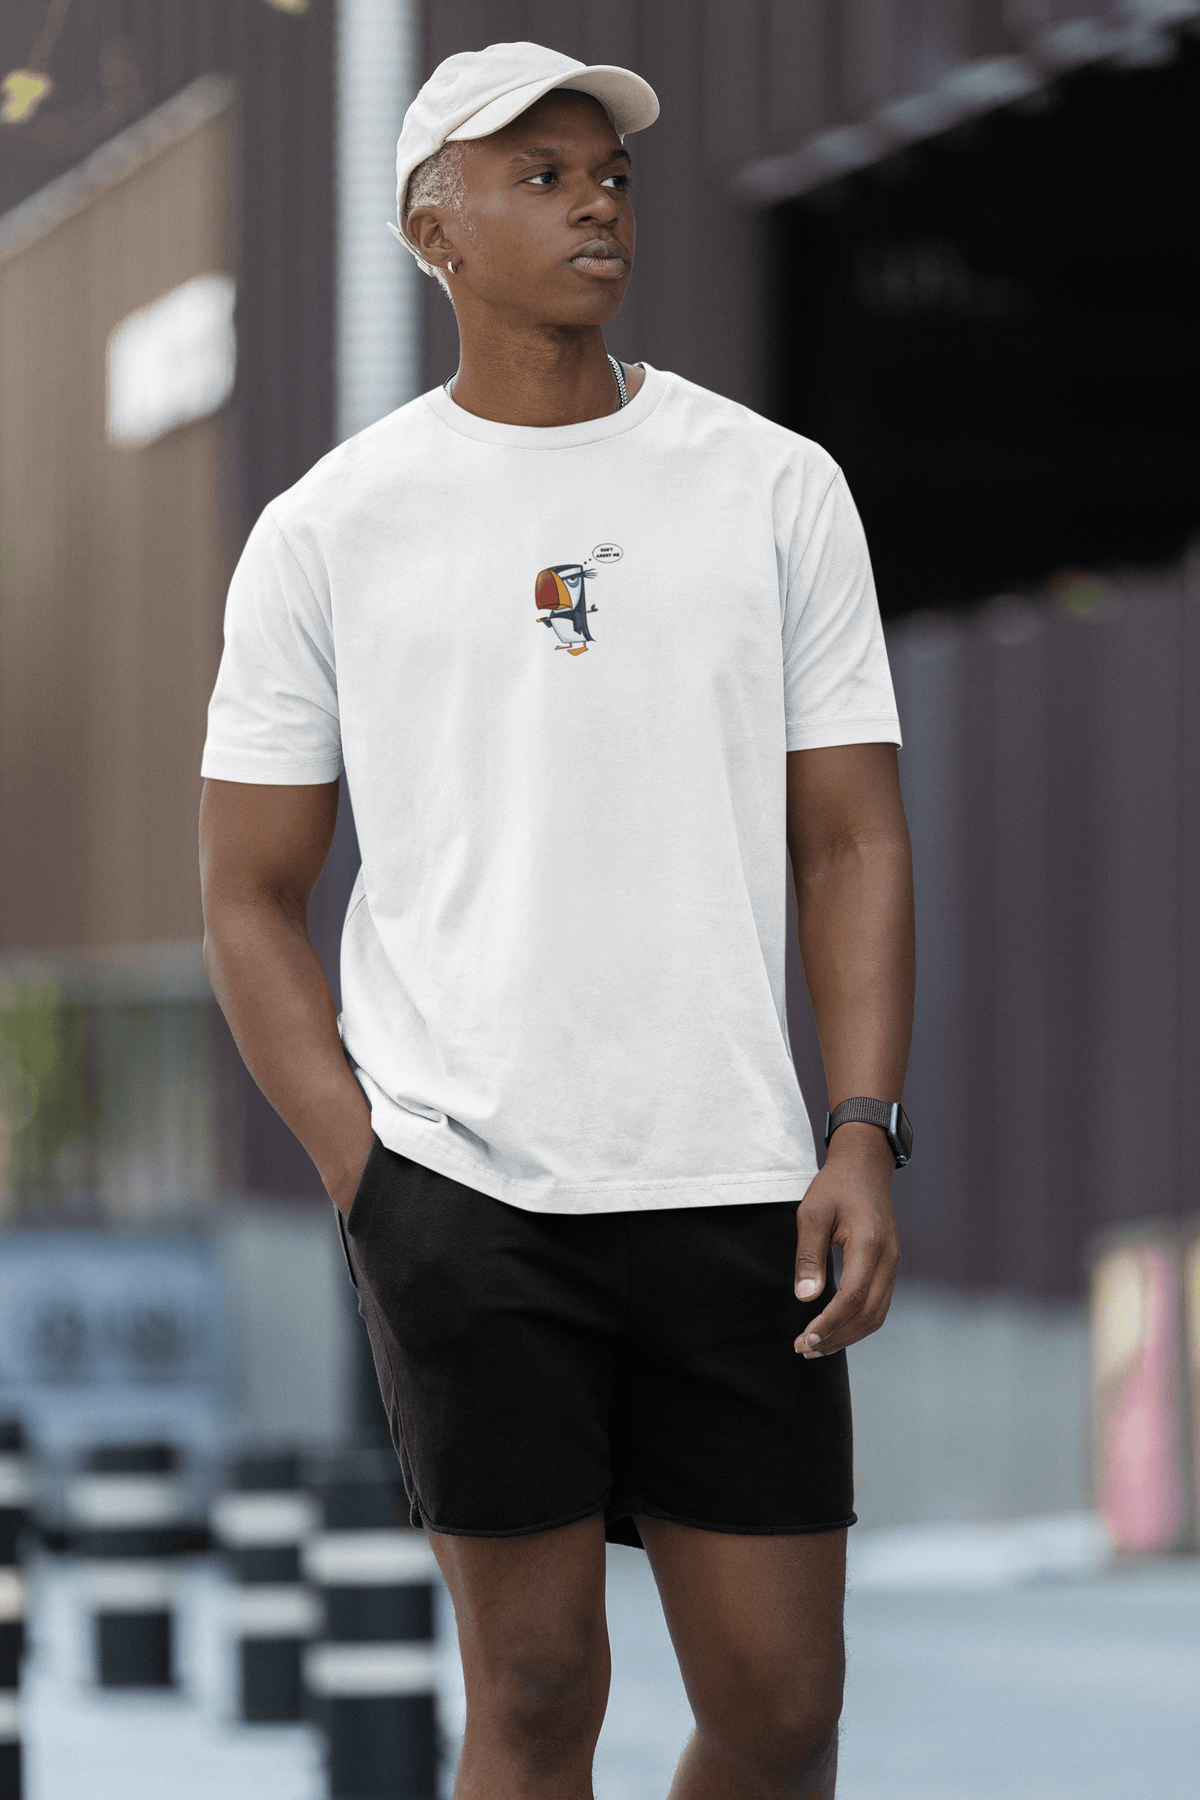 Zaza Bird White Unisex T-Shirt